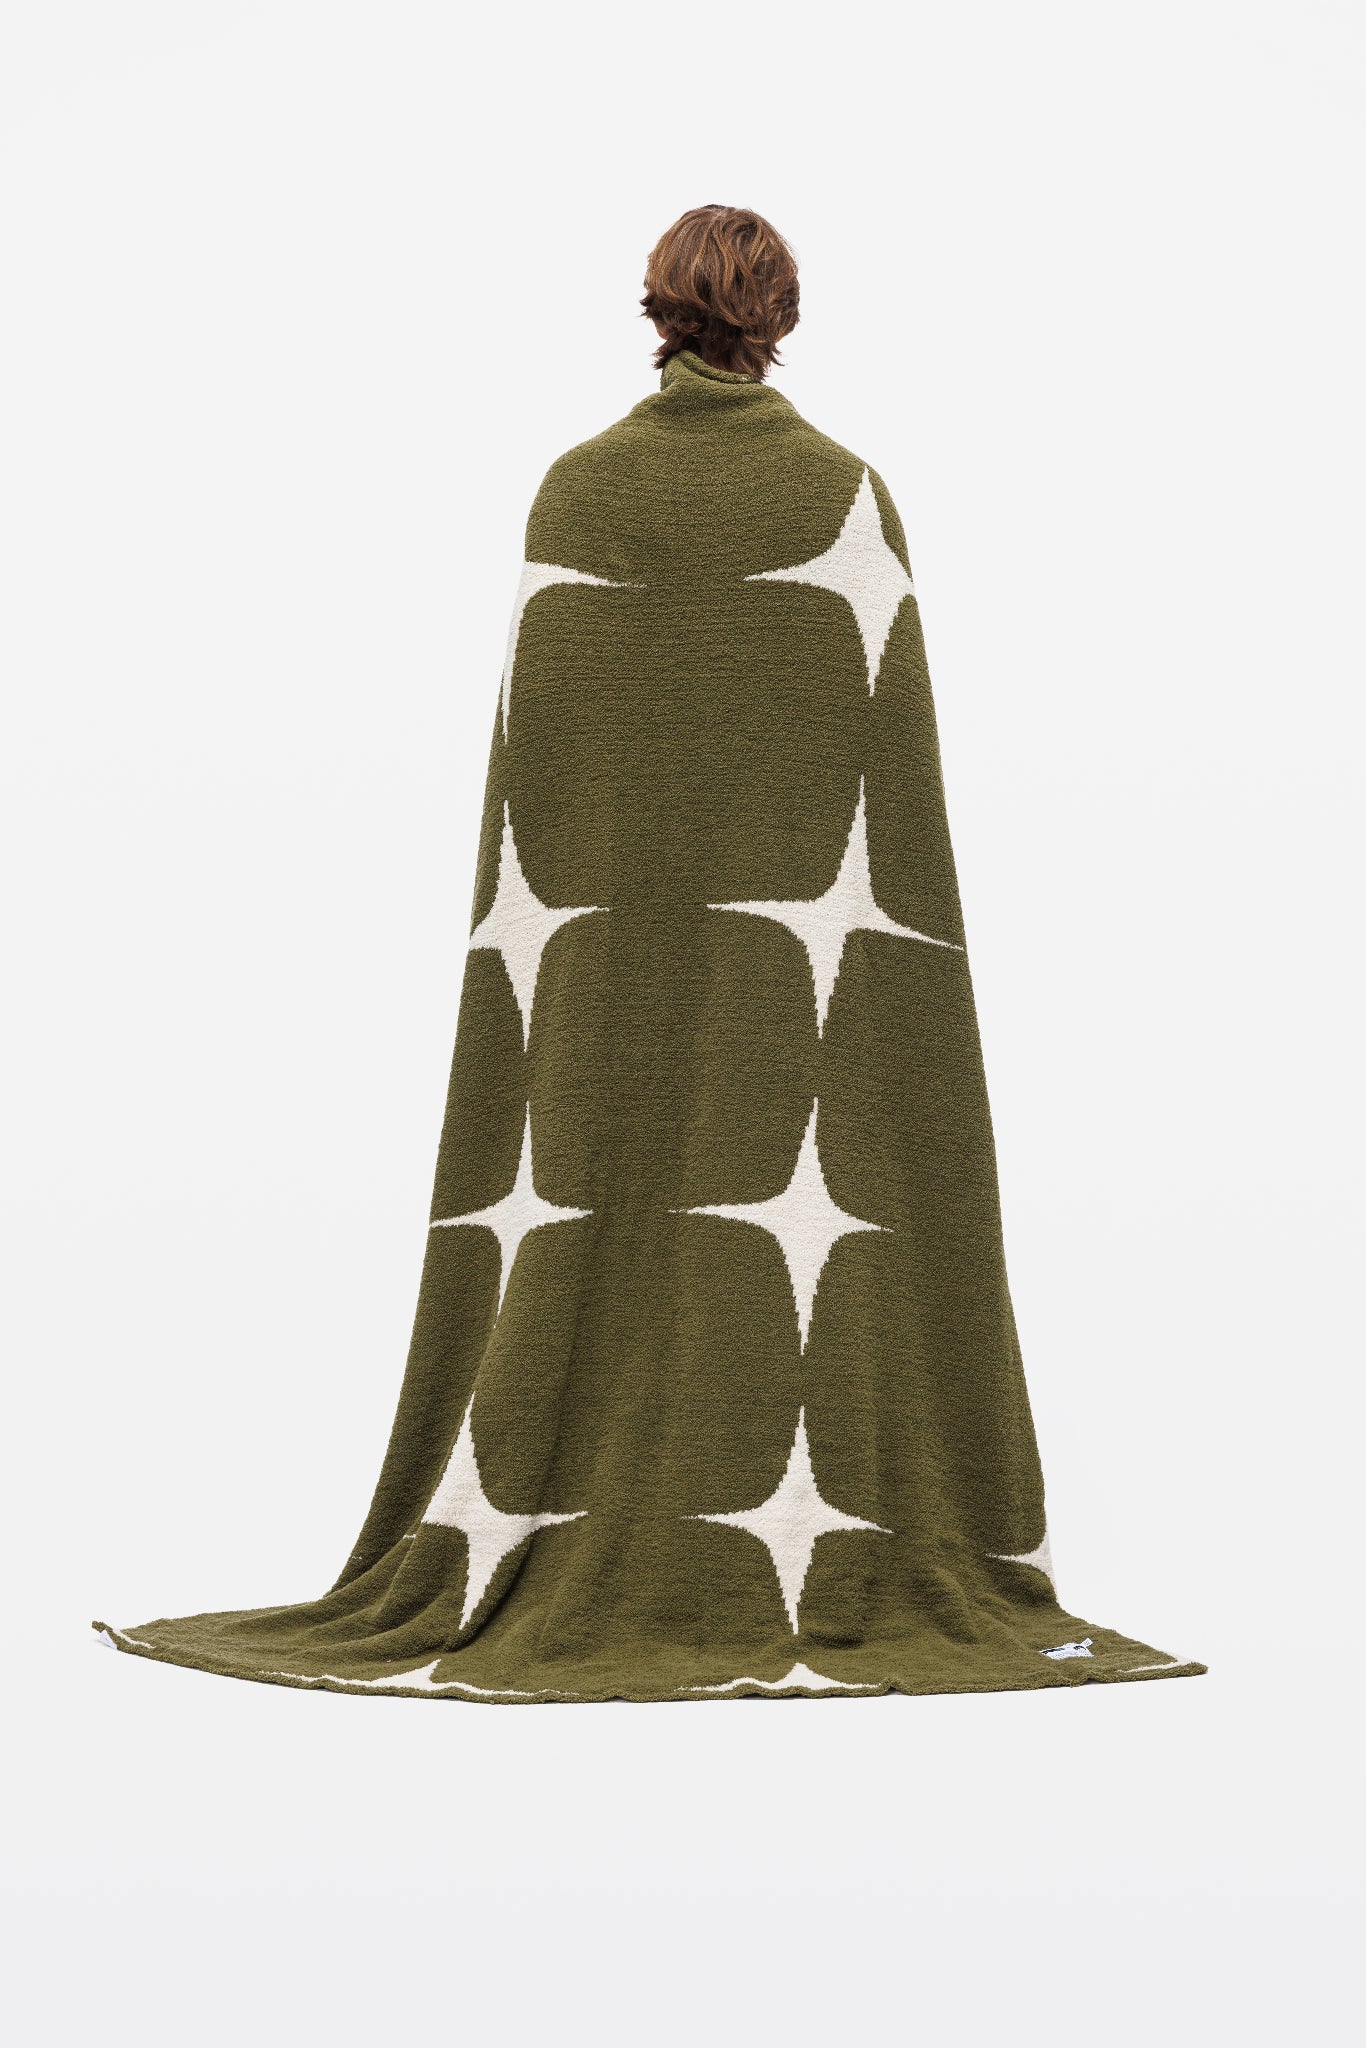 Olive Star Patterned Soft Plush Stargaze Throw Blanket - Throw - Touchofgod.co